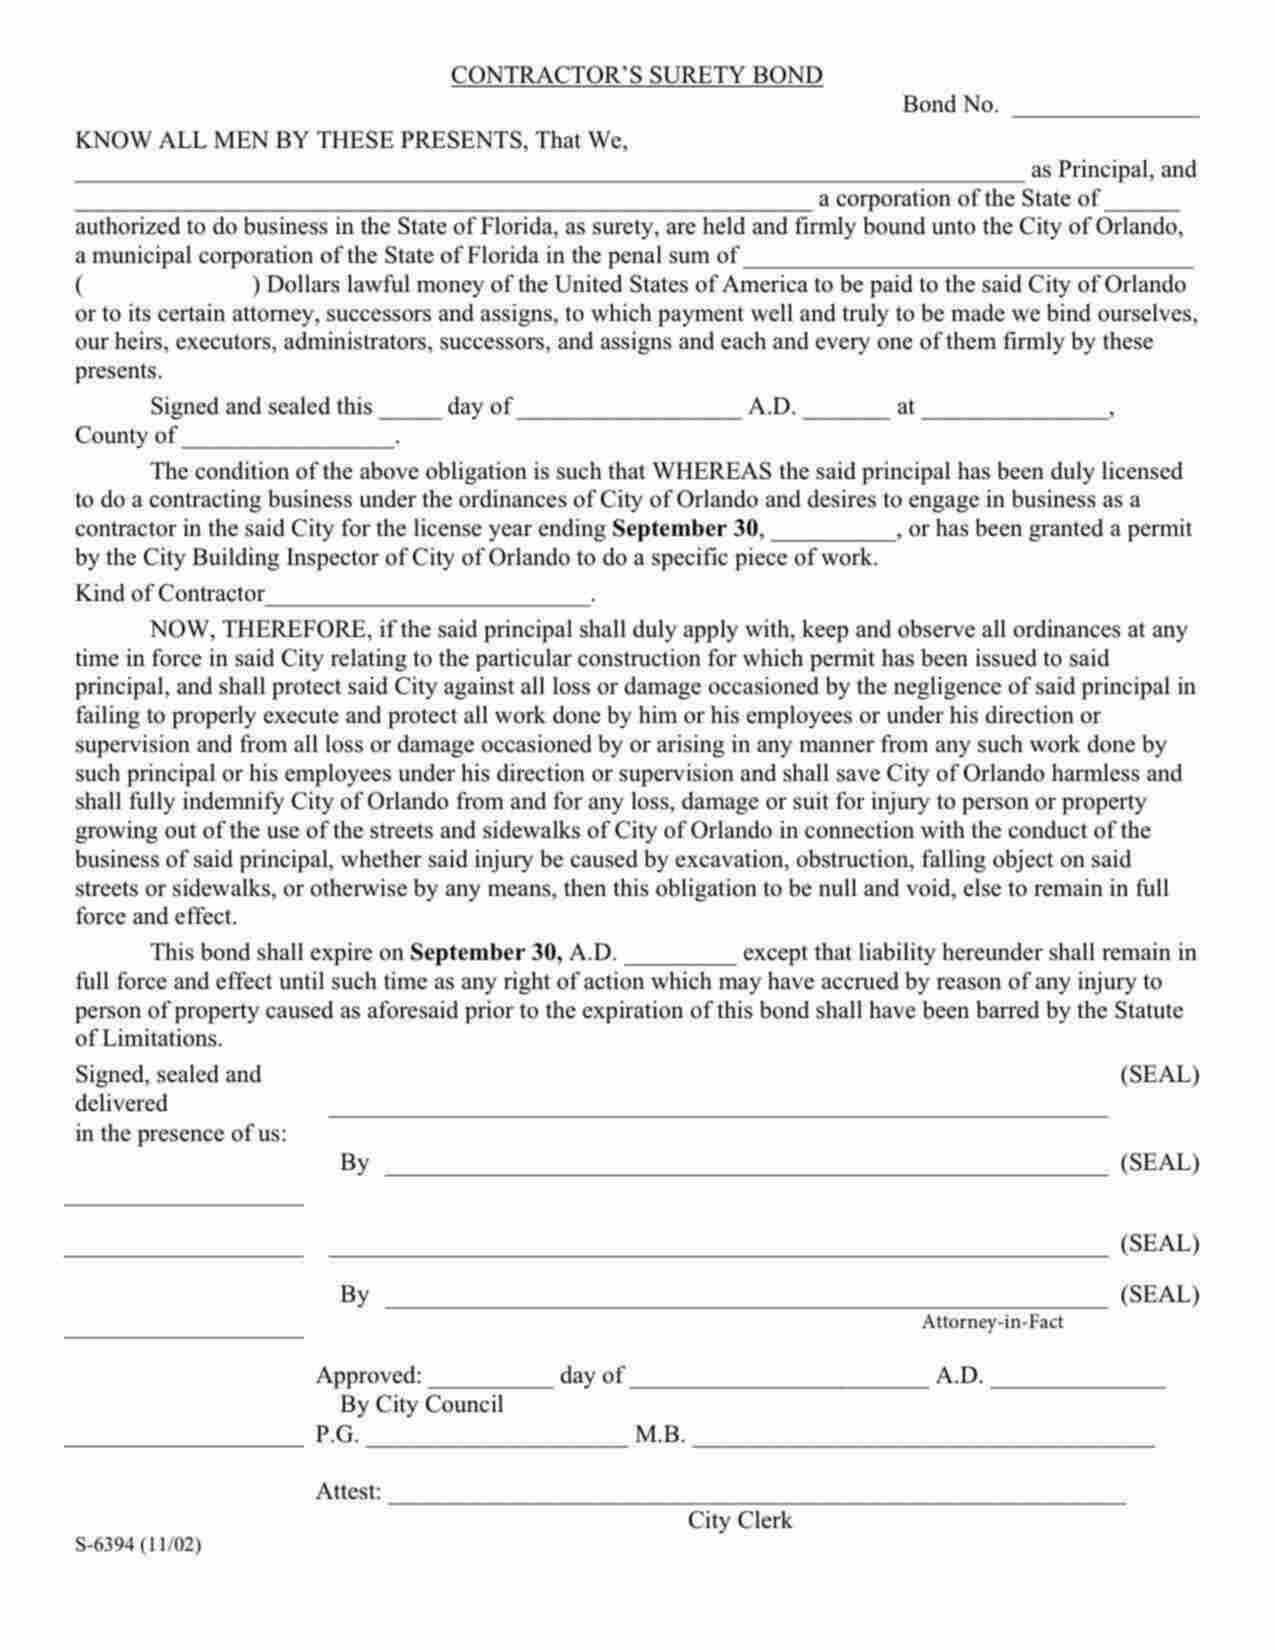 Florida Contractor's License/Permit Bond Form